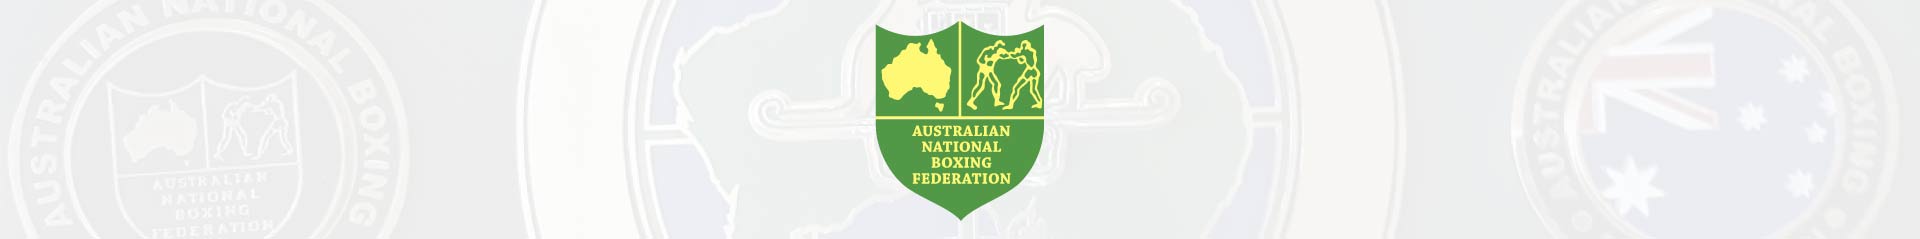 Australian National Boxing Federation | AUSTRALASIAN FEMALE NATIONAL ...